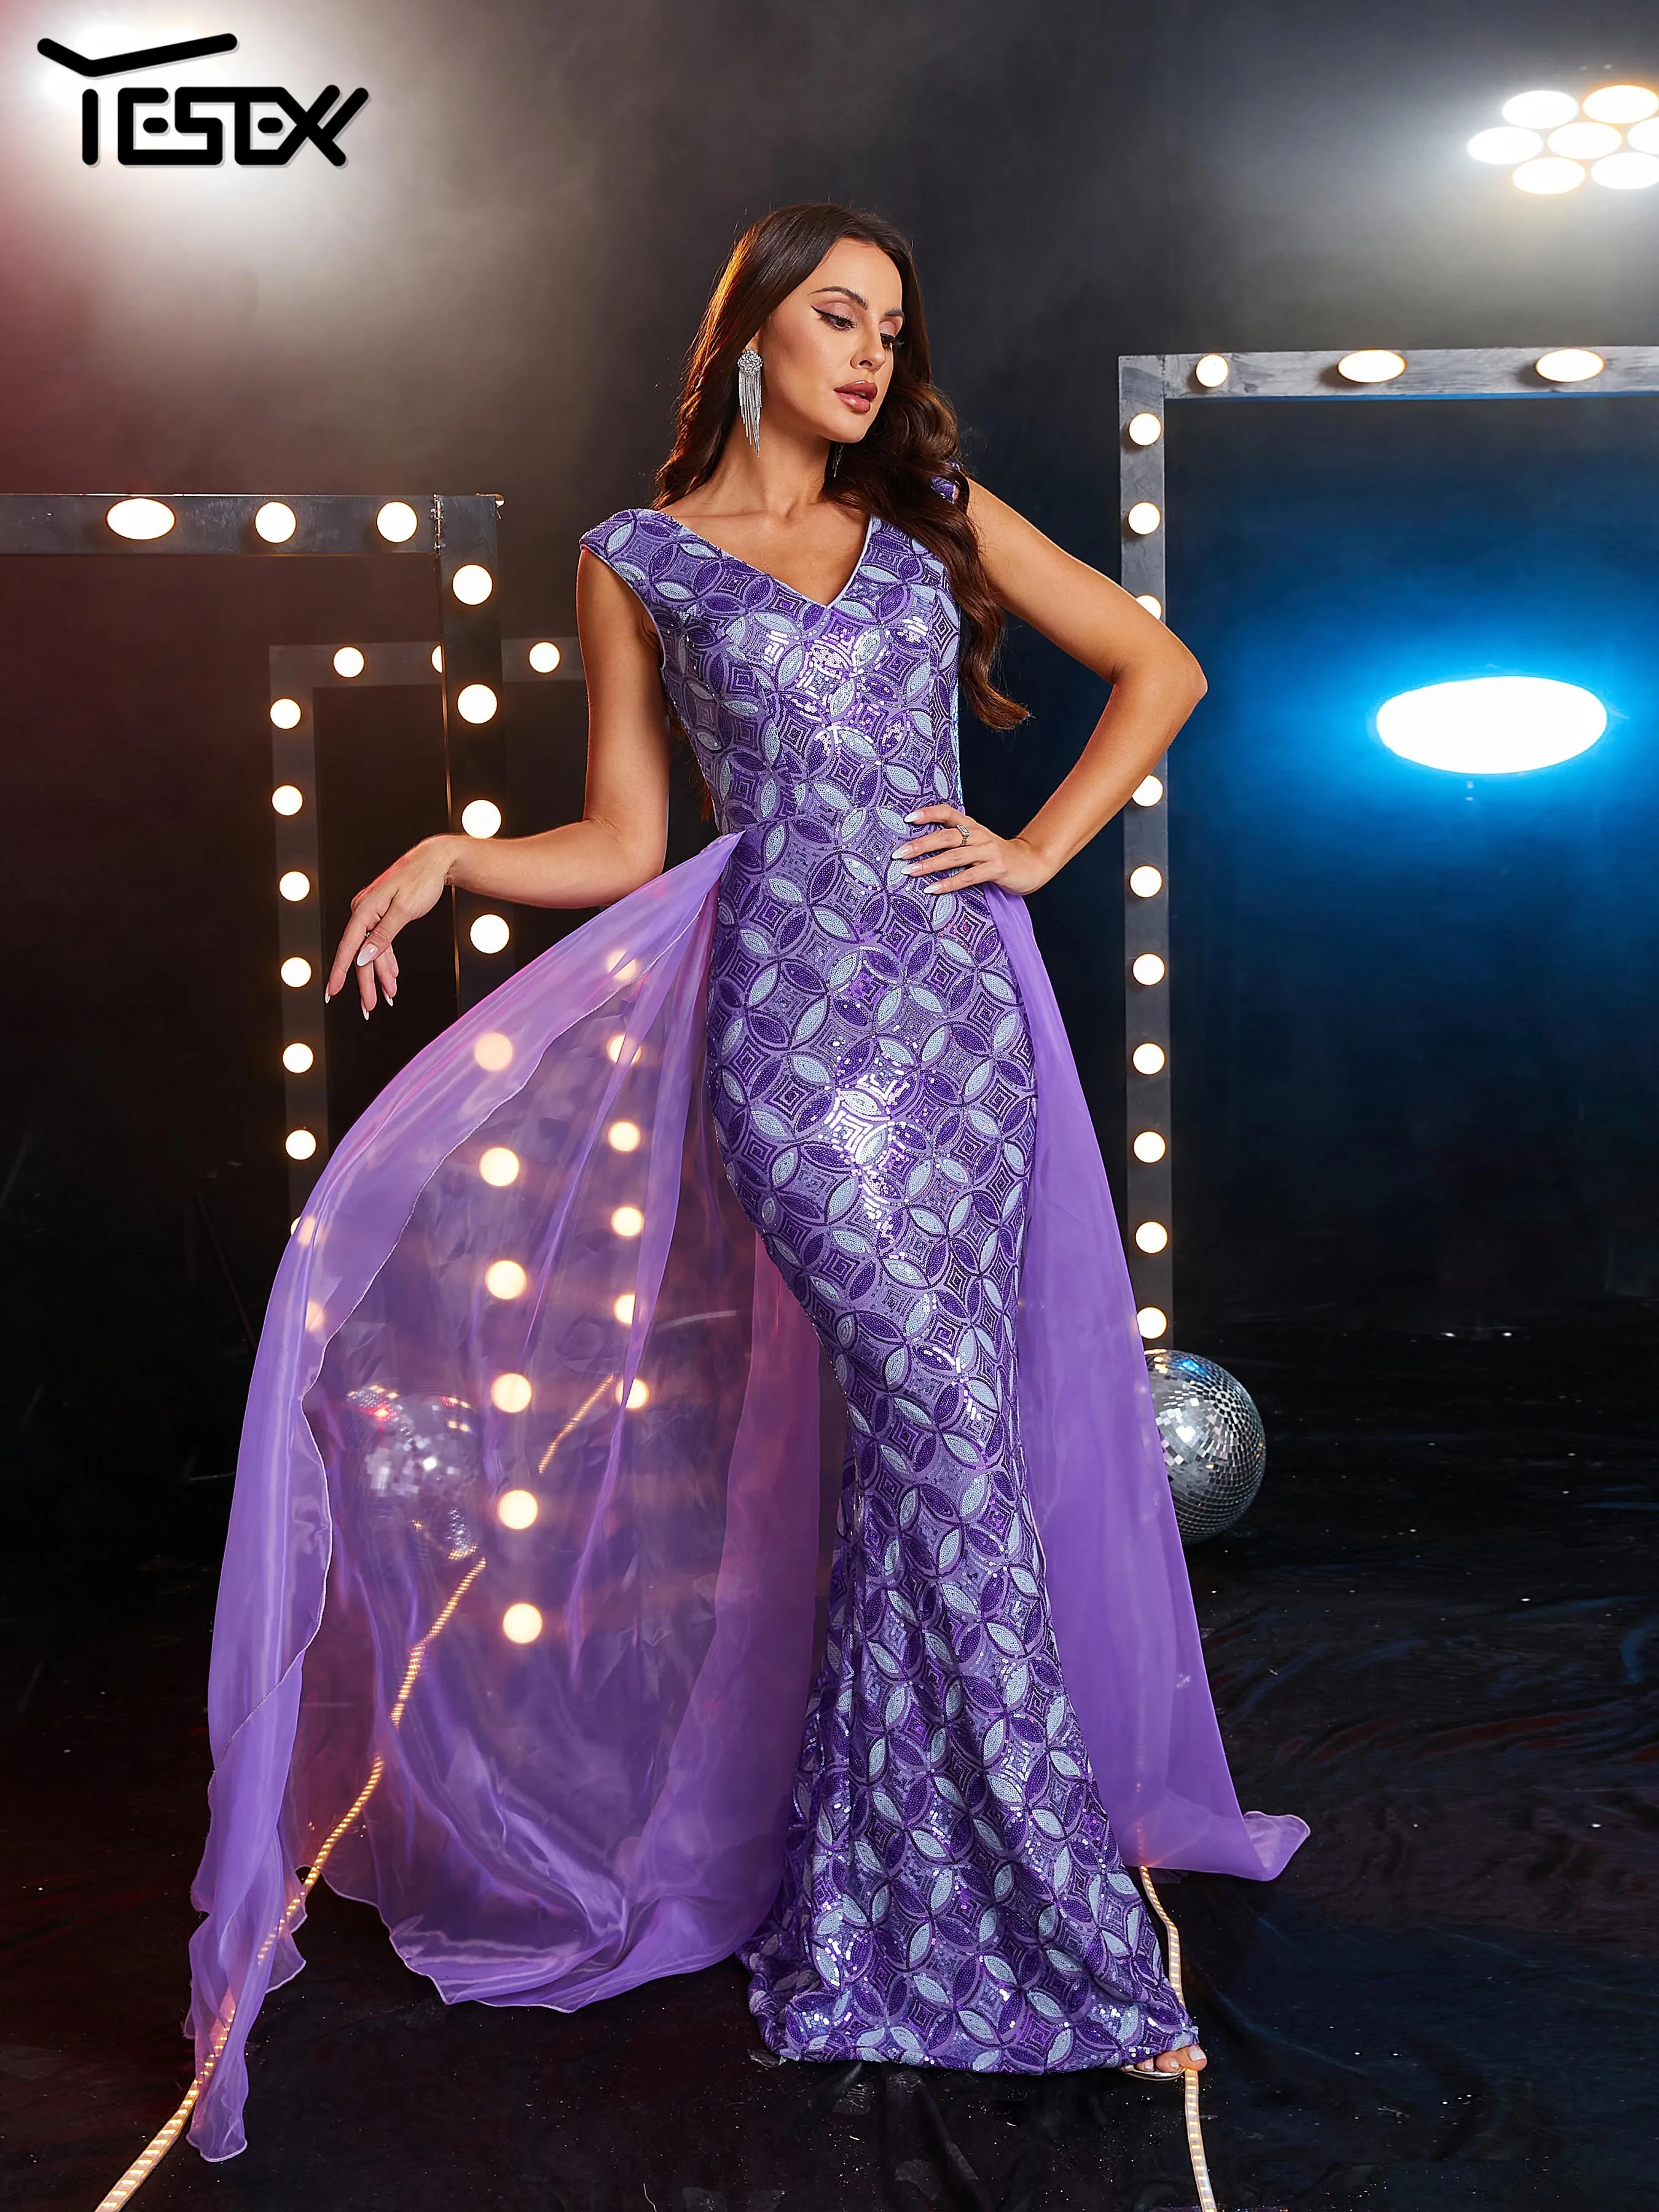 

Yesexy New V Neck Purple Cocktail Sequin Mermaid Evening Mesh Prom Elegant Beautiful Women's Dress